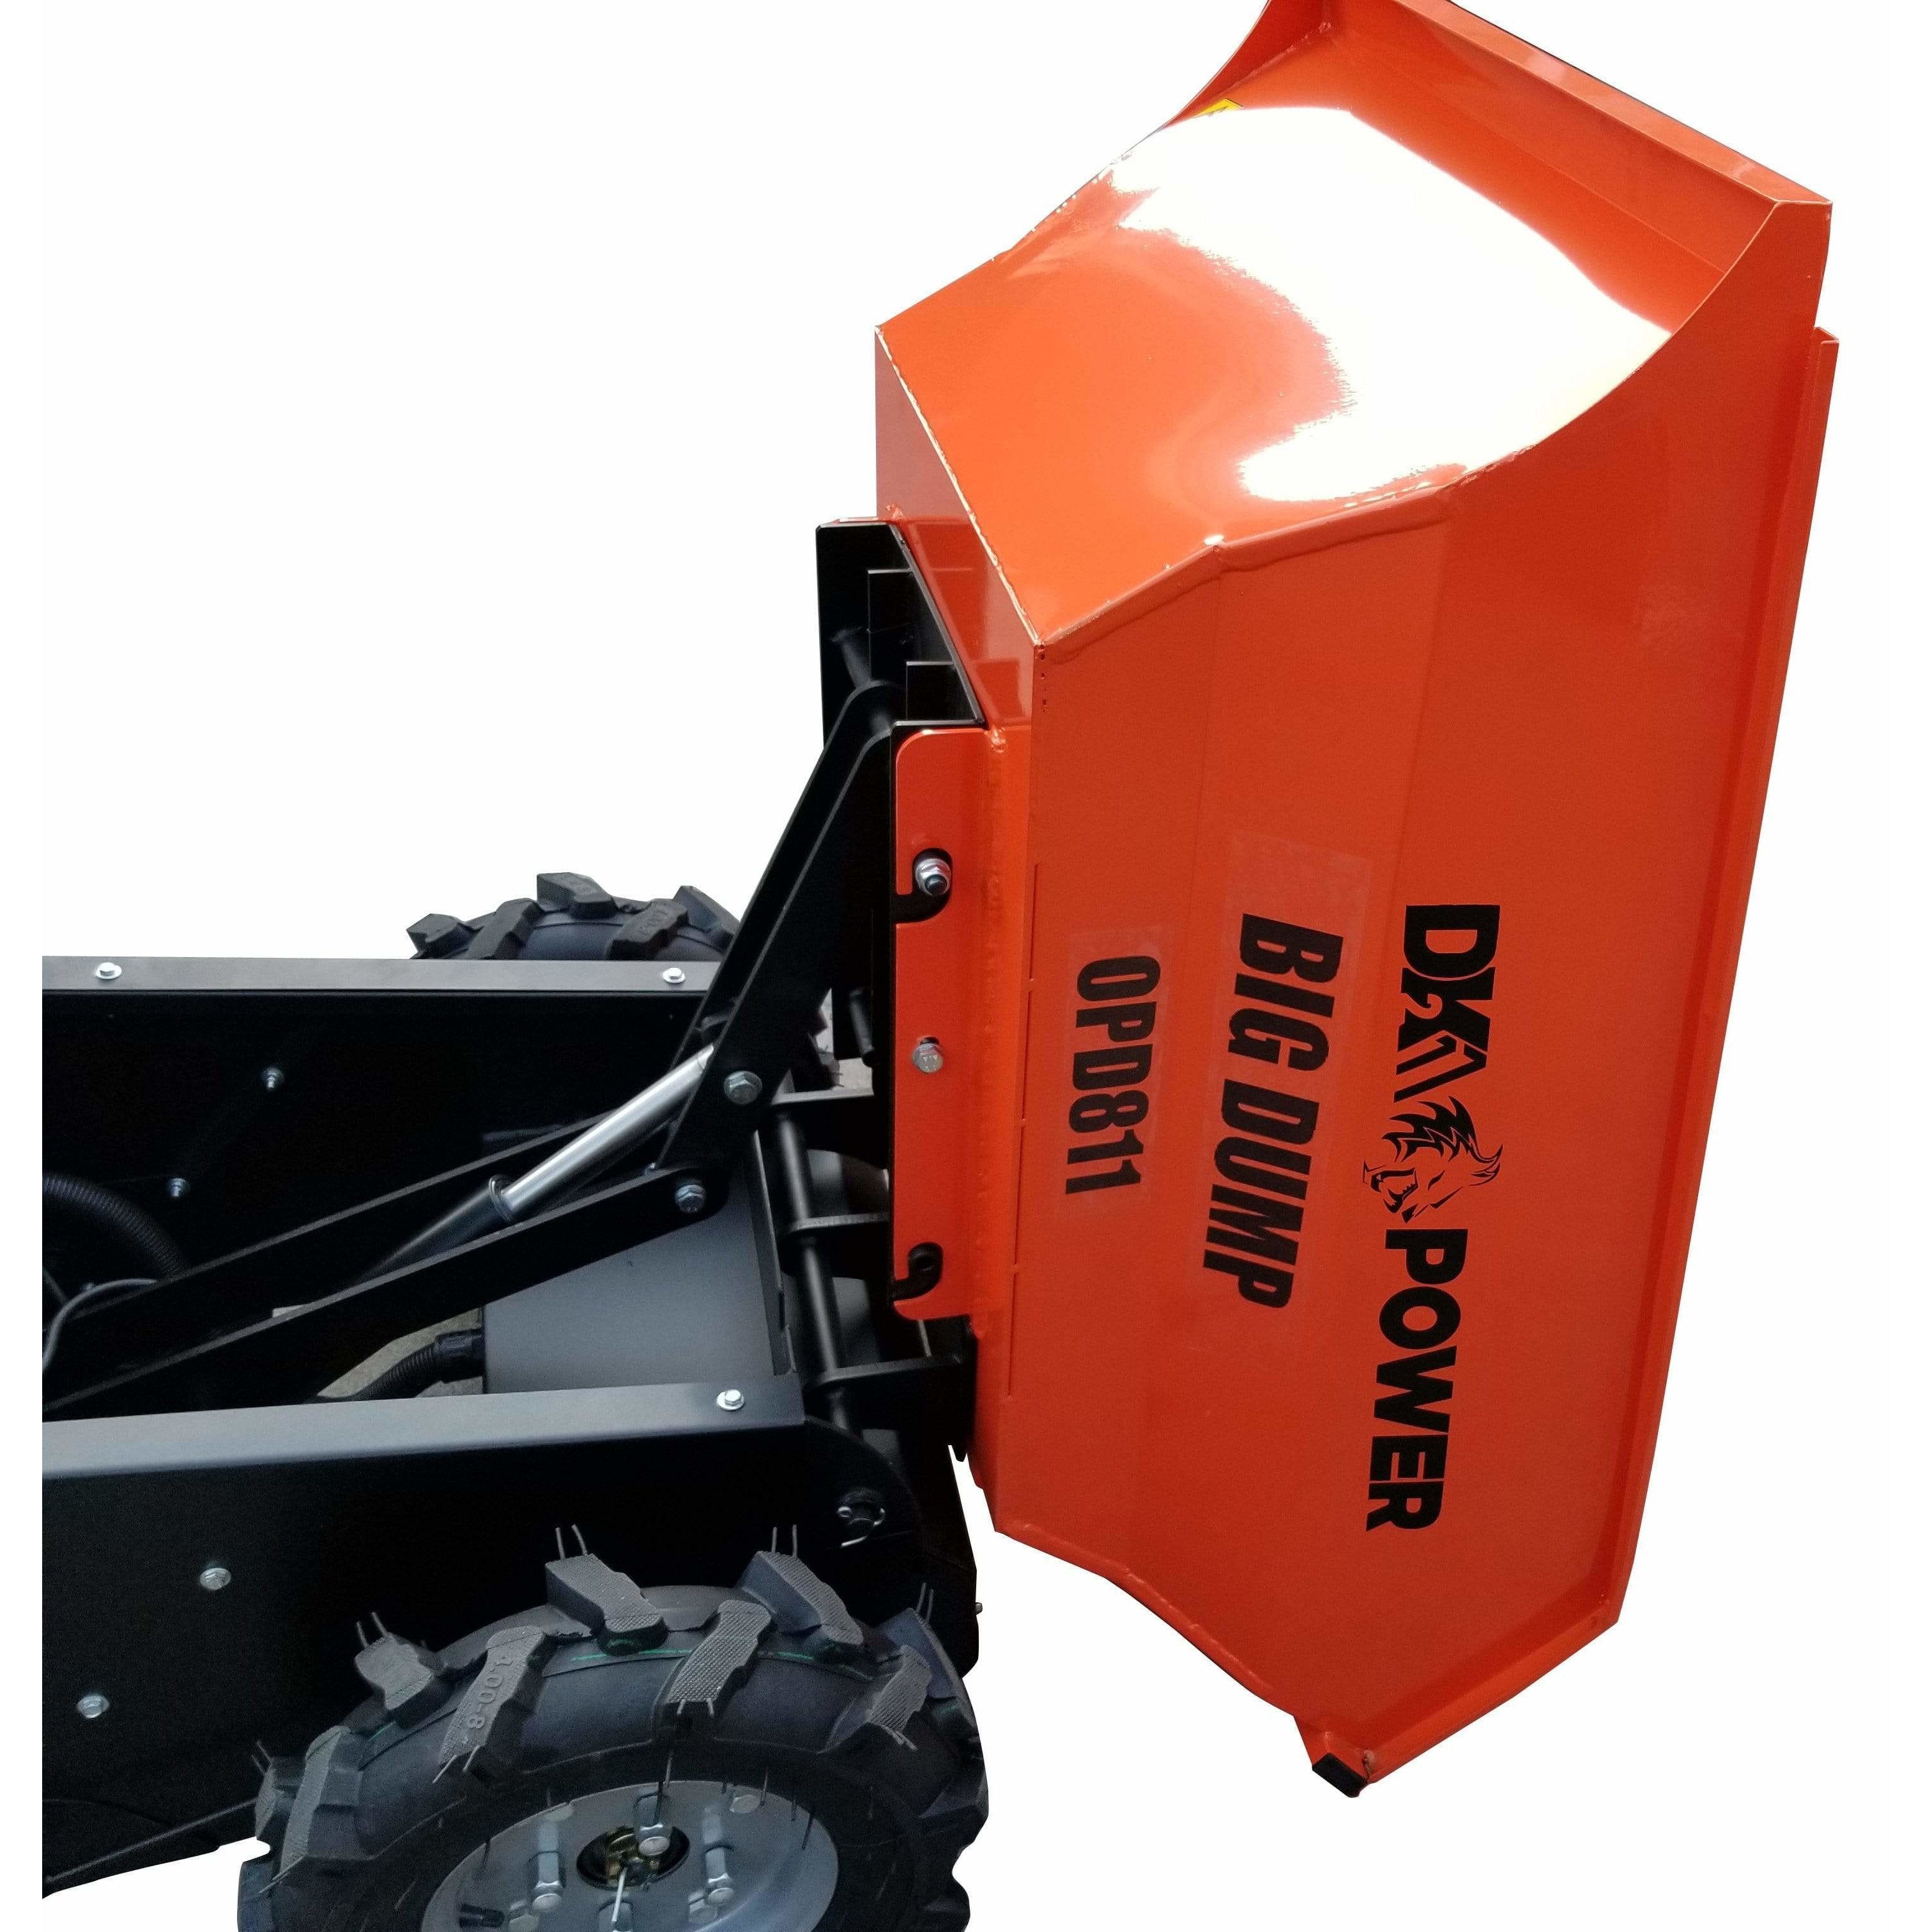 The Dk2 Power All-terrain Electric Powered Dump Cart Moves 1100 Lbs - OPD811